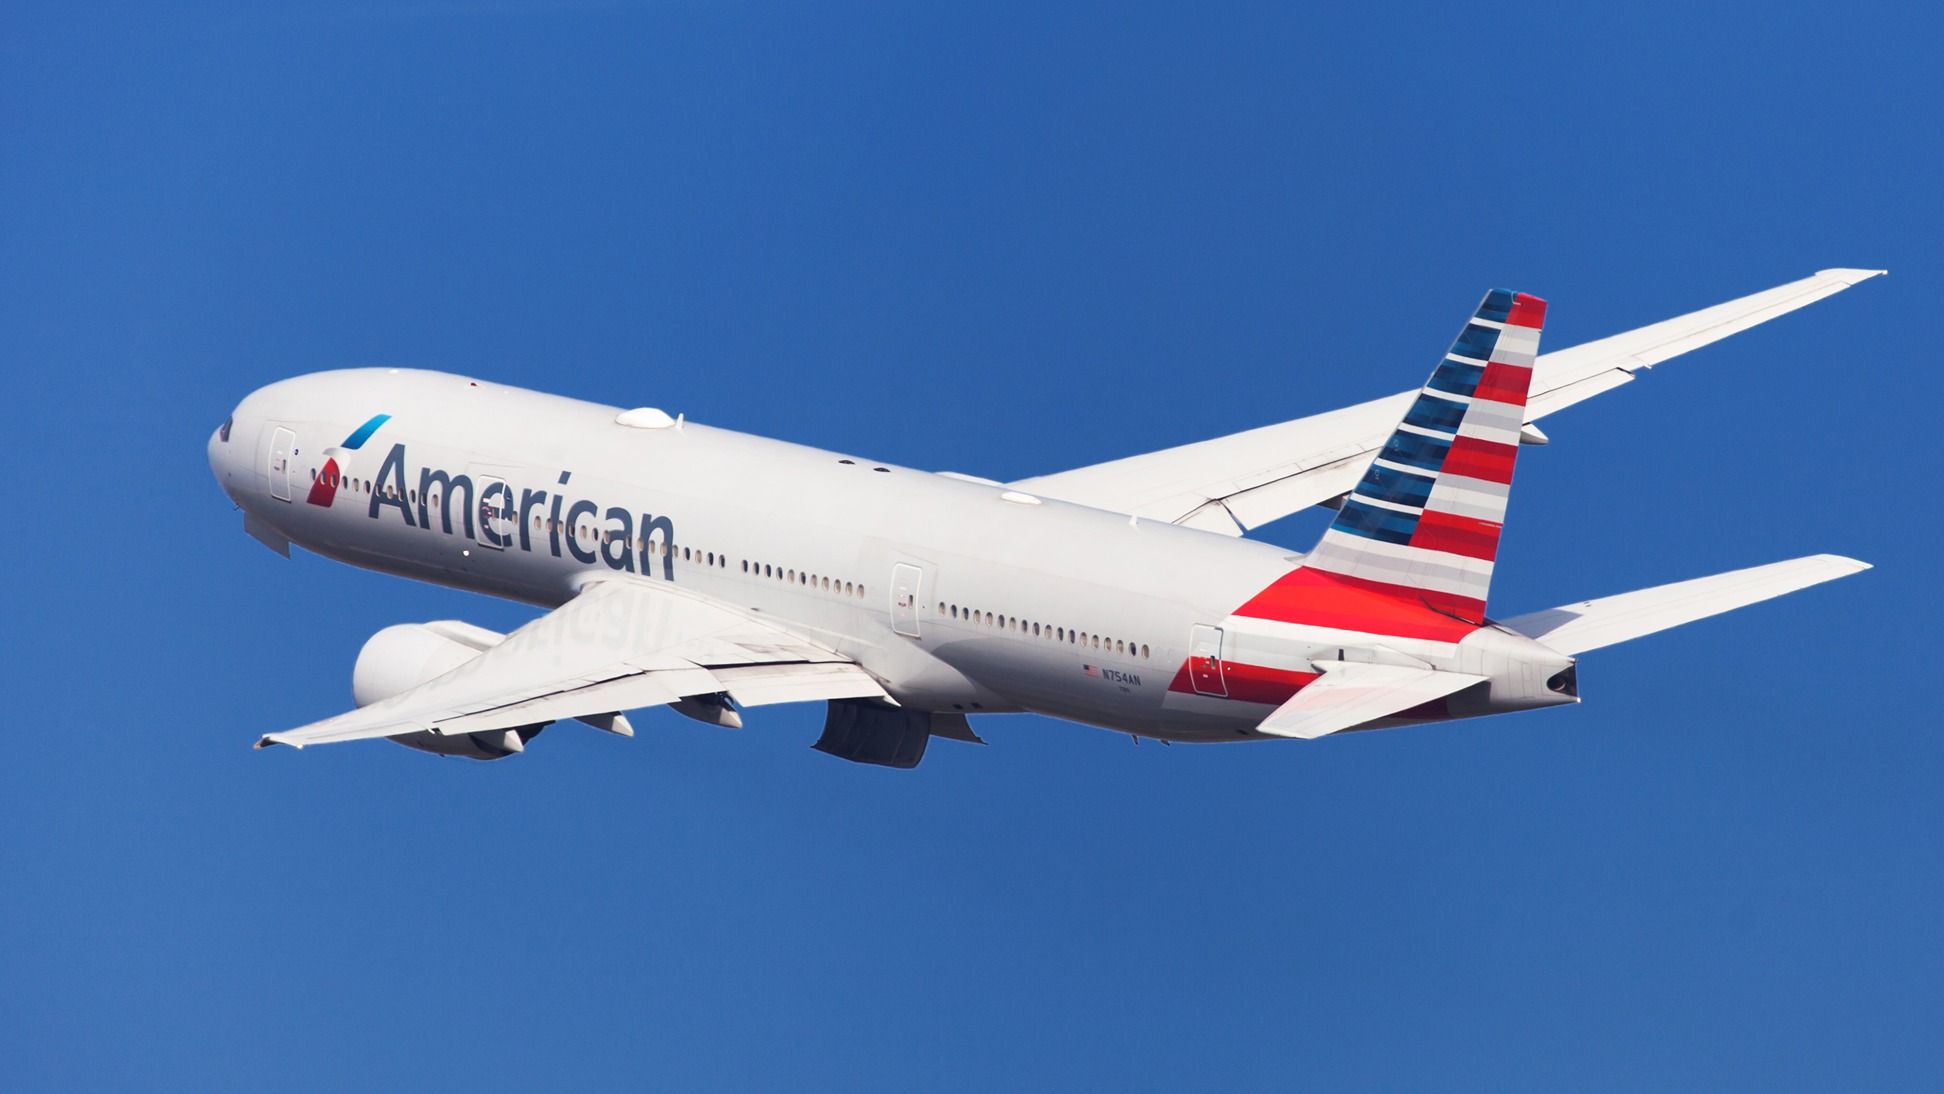 American Airlines Boeing 777-200ER departing shutterstock_1161243796